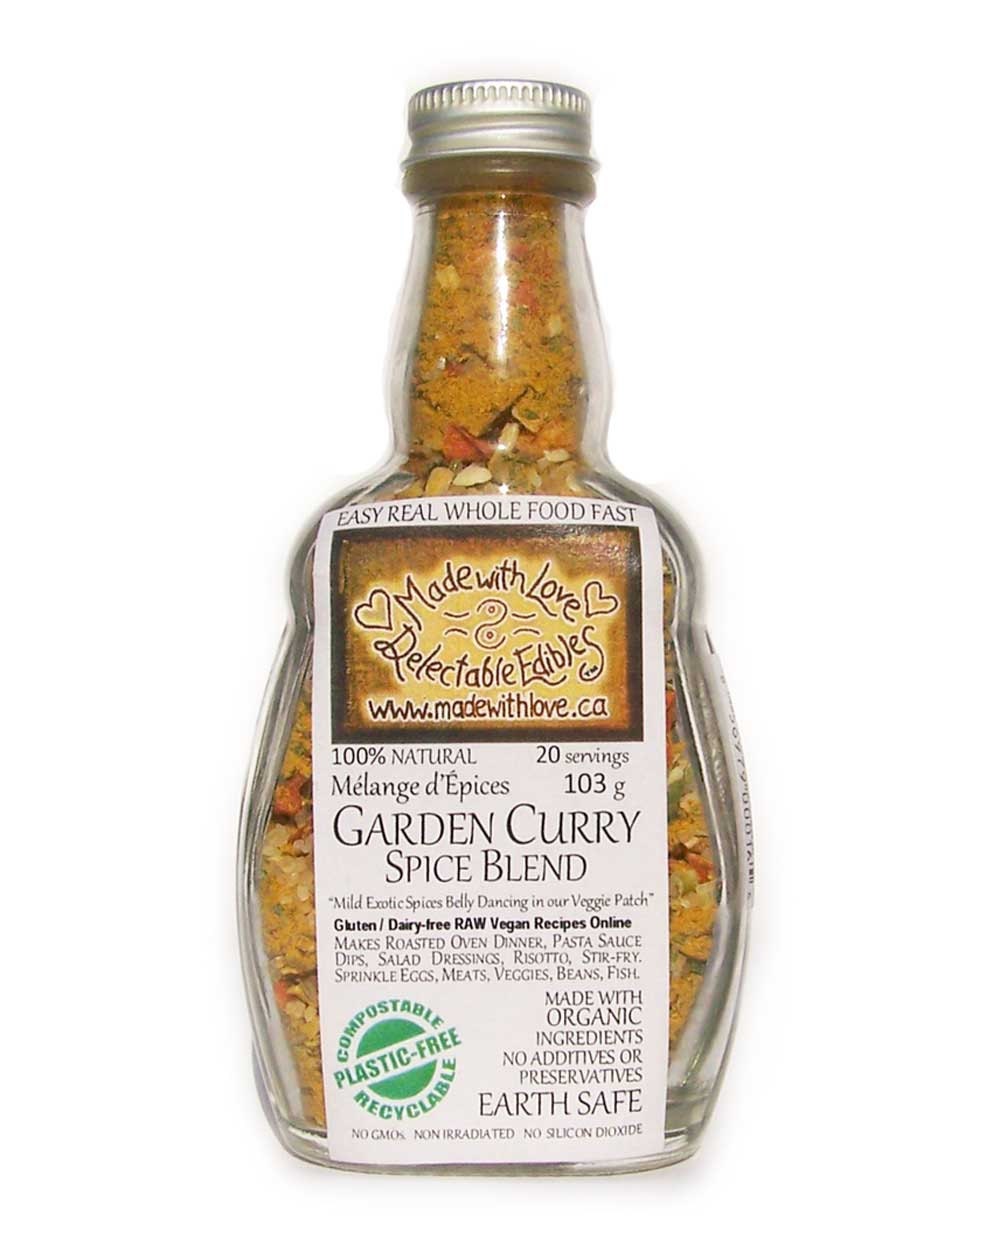 Garden Curry 4.5Oz Artisan Spice Blend Organic & Veggie Mix Gluten Free Vegan Dairy - Herb Food Pasta Sauce Dip